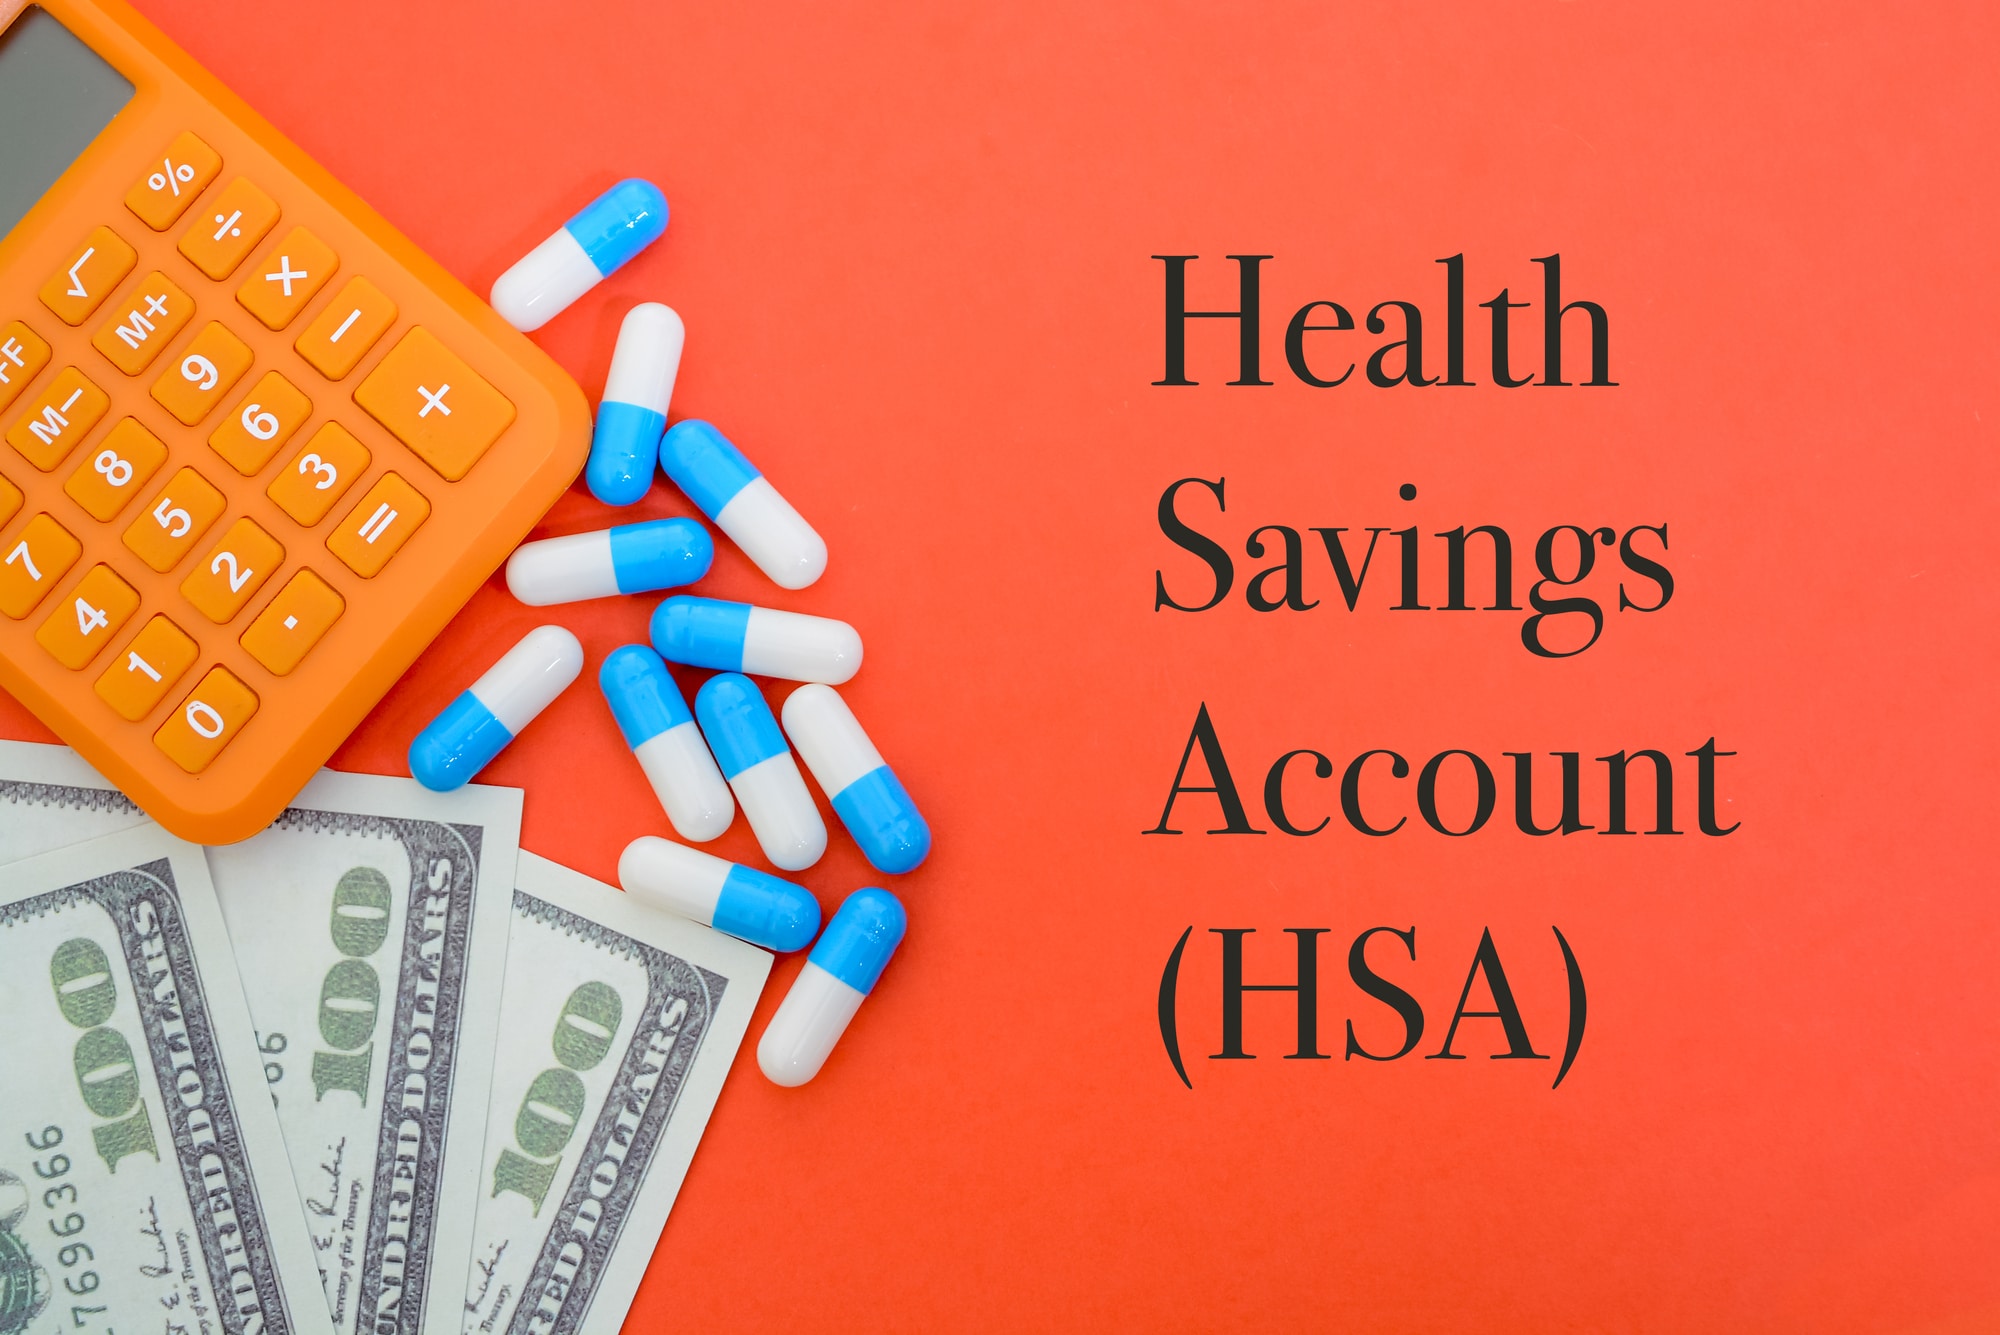 You Have a Health Savings Account (HSA)